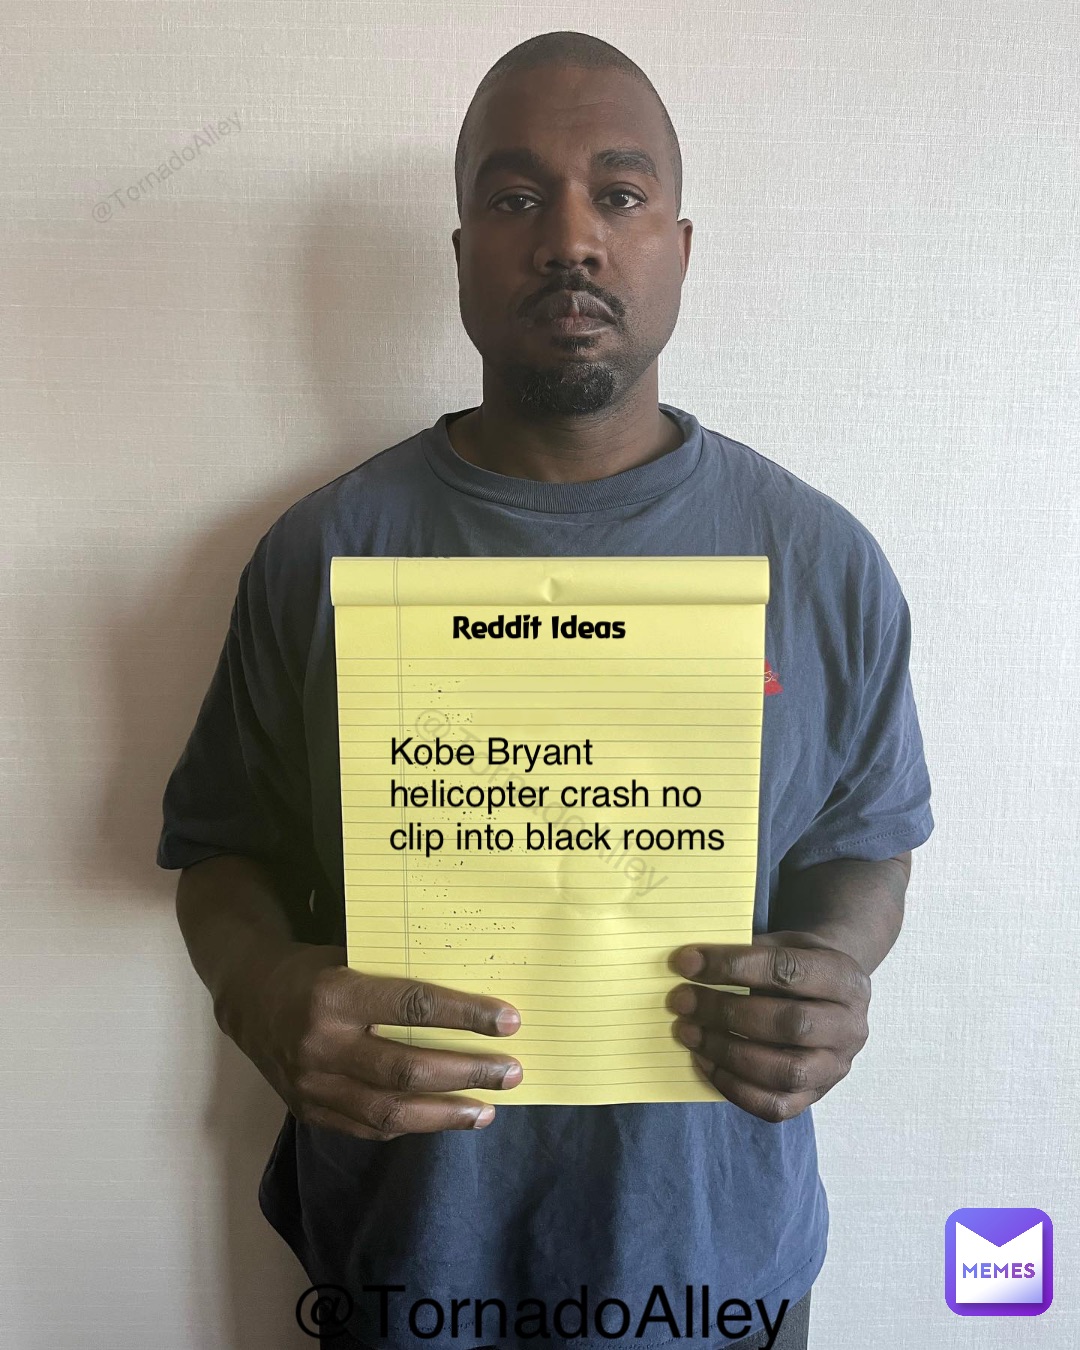 Reddit Ideas Kobe Bryant helicopter crash no clip into black rooms @TornadoAlley @TornadoAlley @TornadoAlley